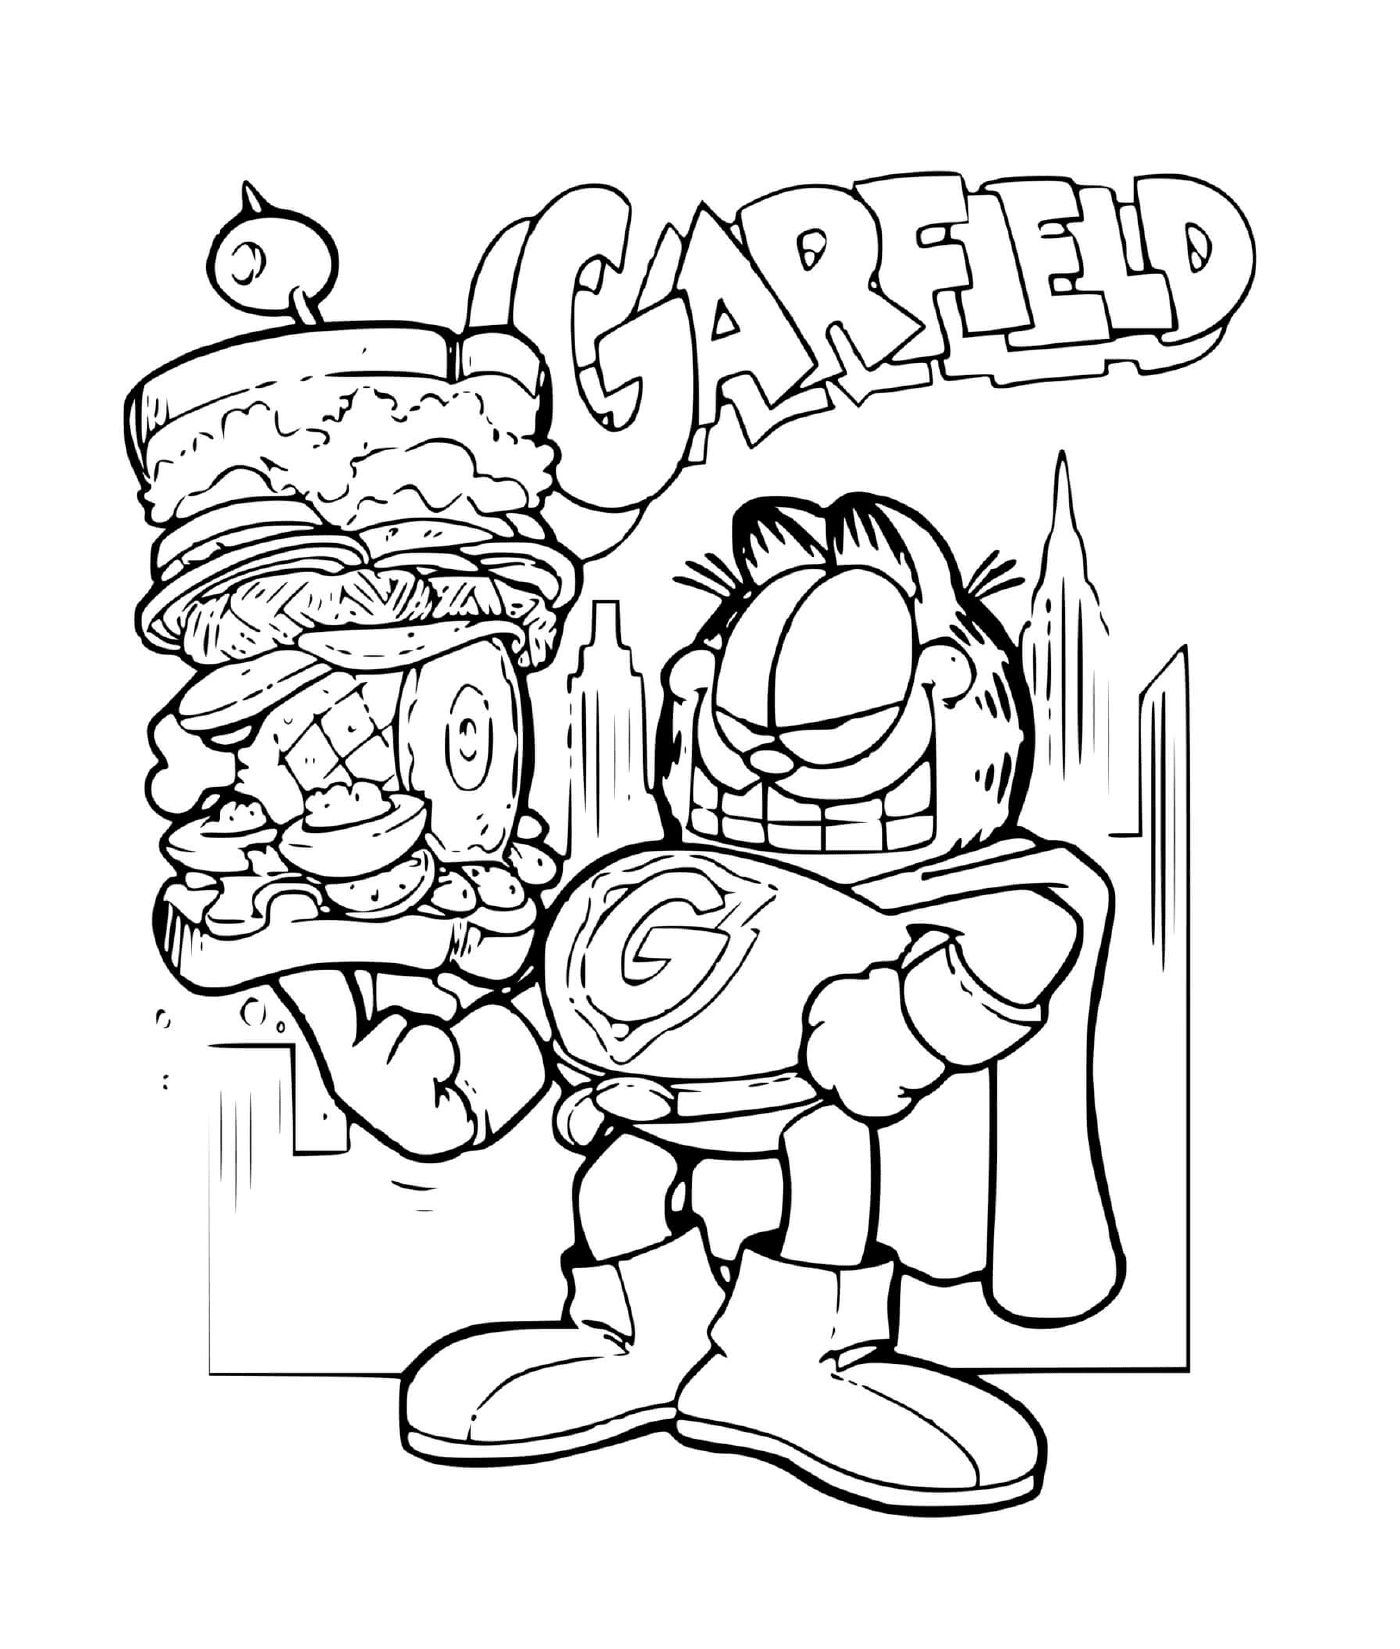  Гарфилд, супергерой бургера 